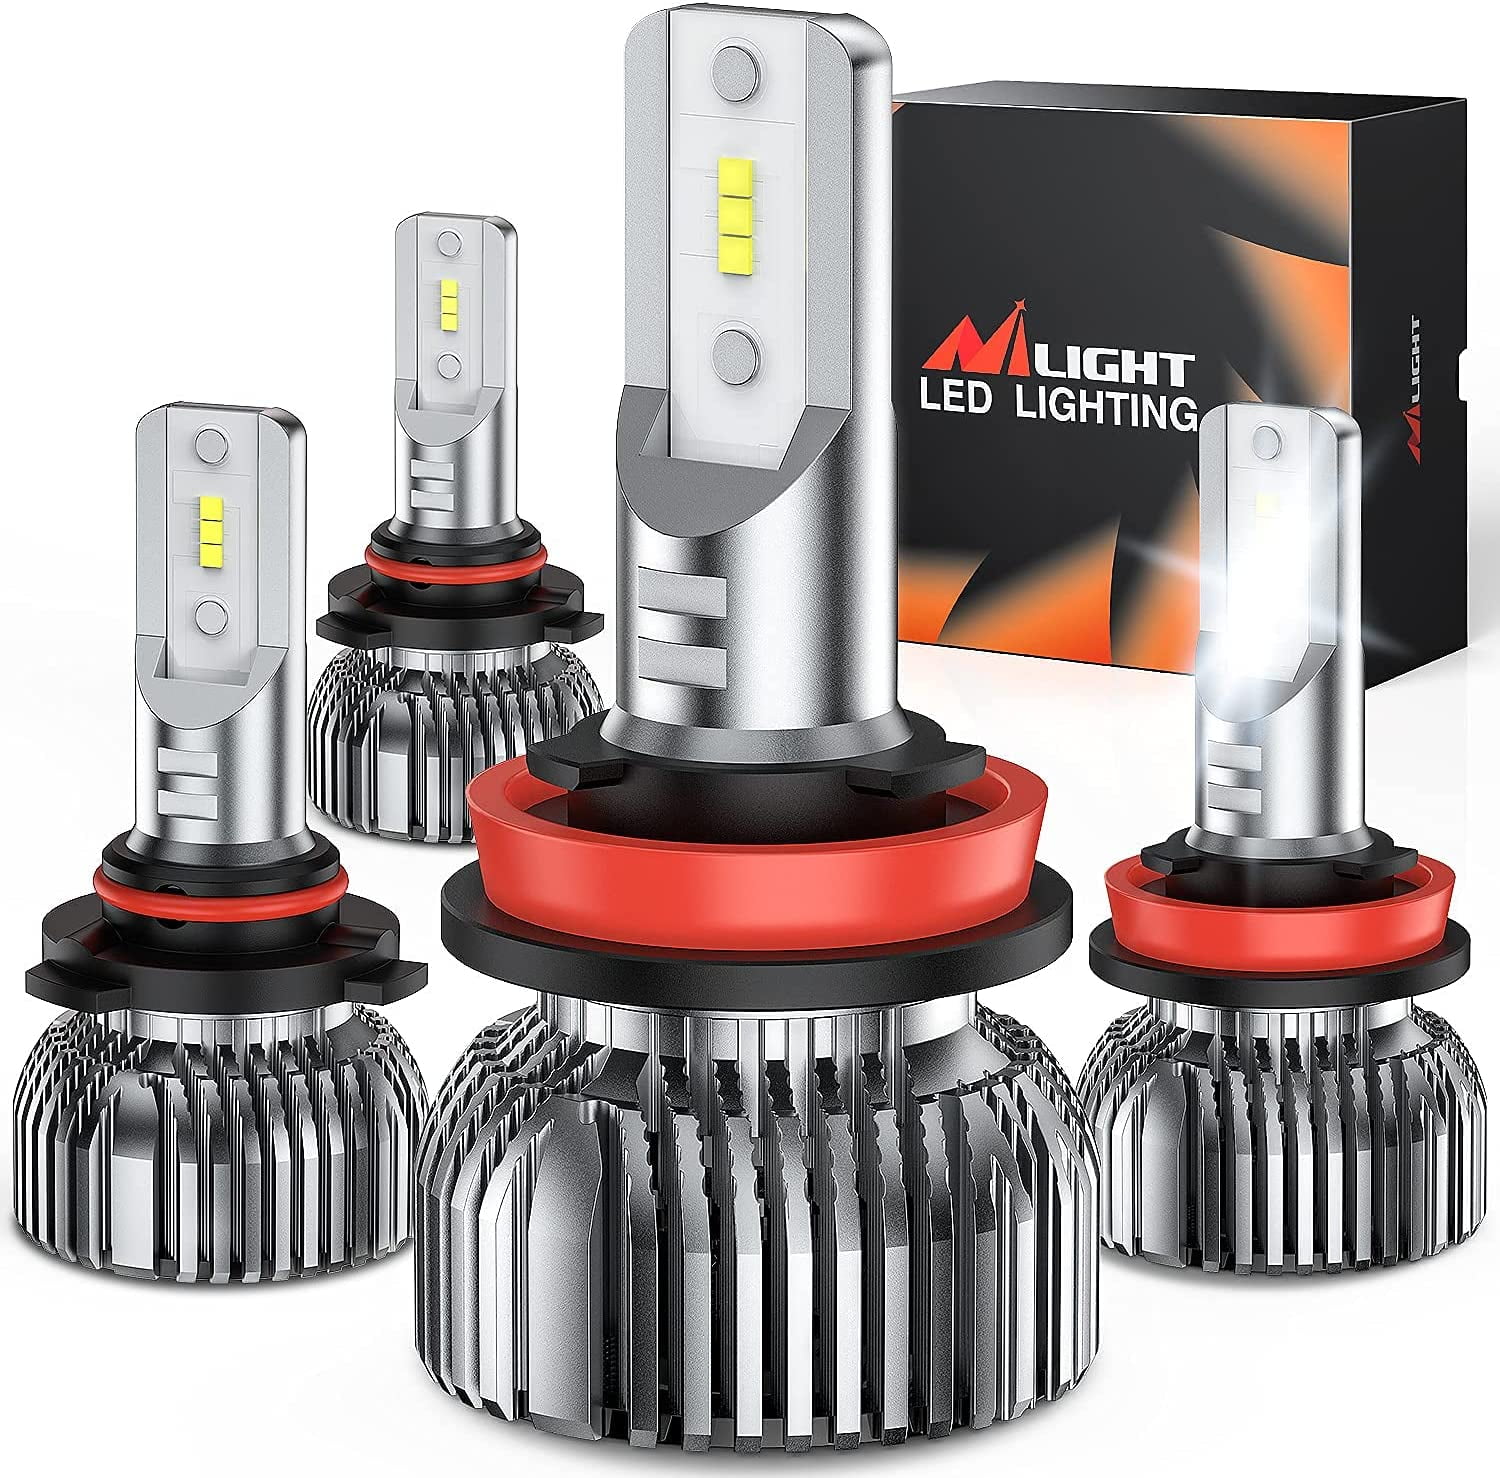 Frokom H11/H8/H9 LED Headlight Bulbs 6000K Cool White 350% Bright than Halogen H11 LED Bulbs low beam Conversion Kit,Waterproof IP67,2PCS 